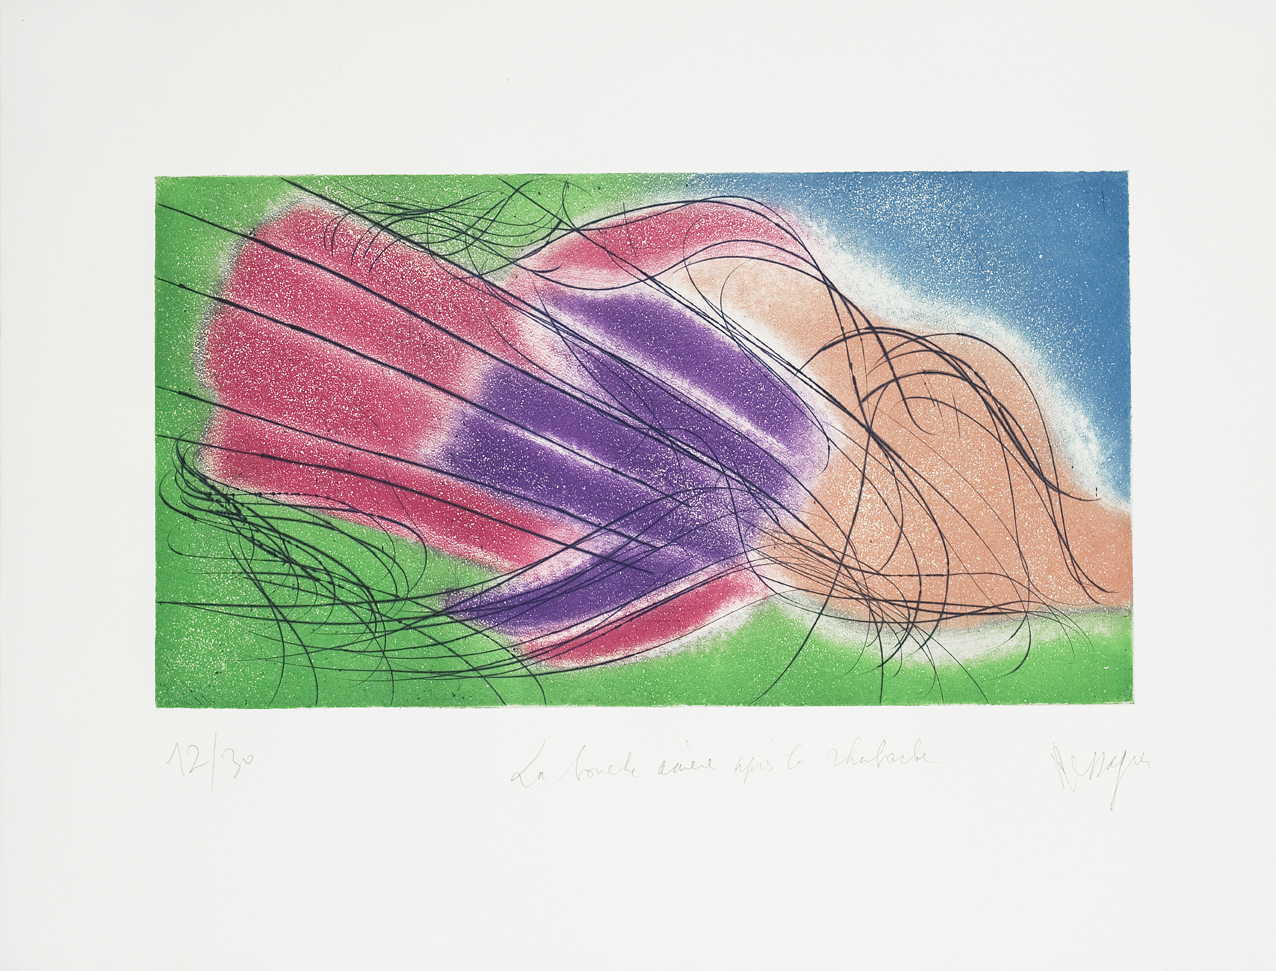 La bouche amre aprs la rhubarbe, 1985